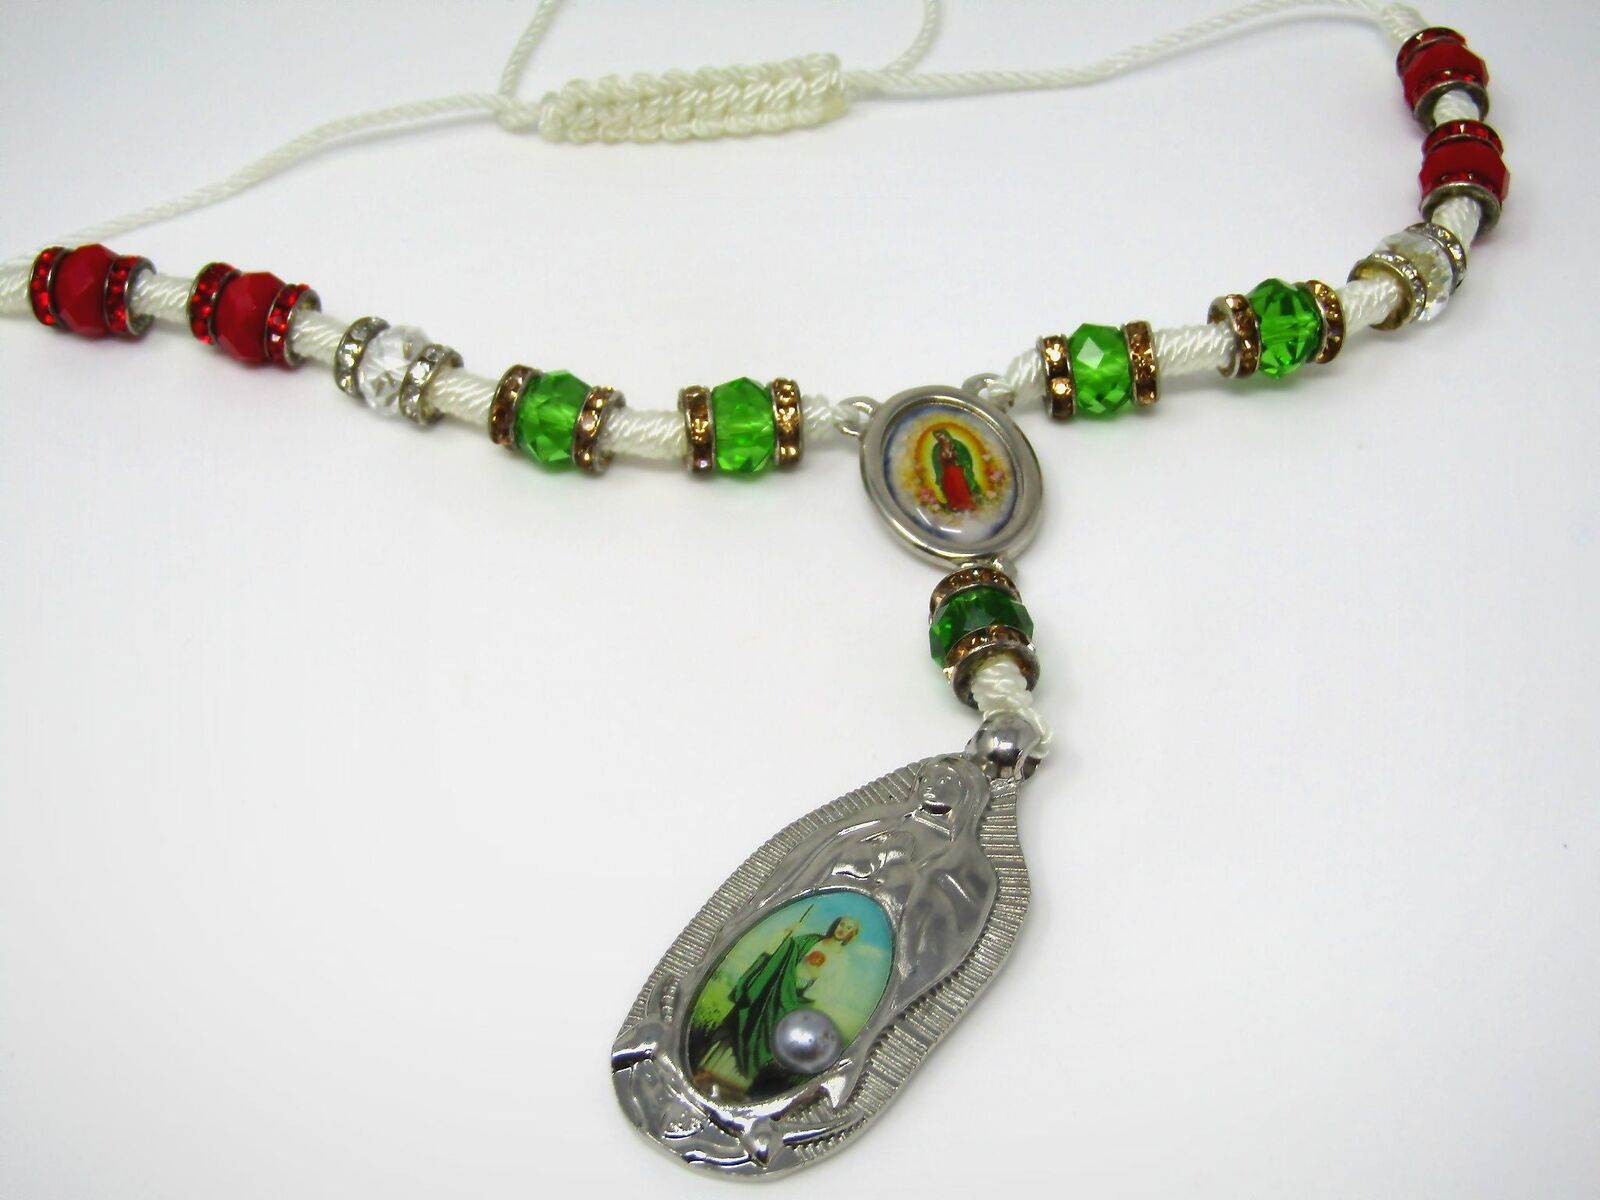 Vintage Christian Necklace Jewelry: Amazing Design Scared Heart Jesus & Mary Ita